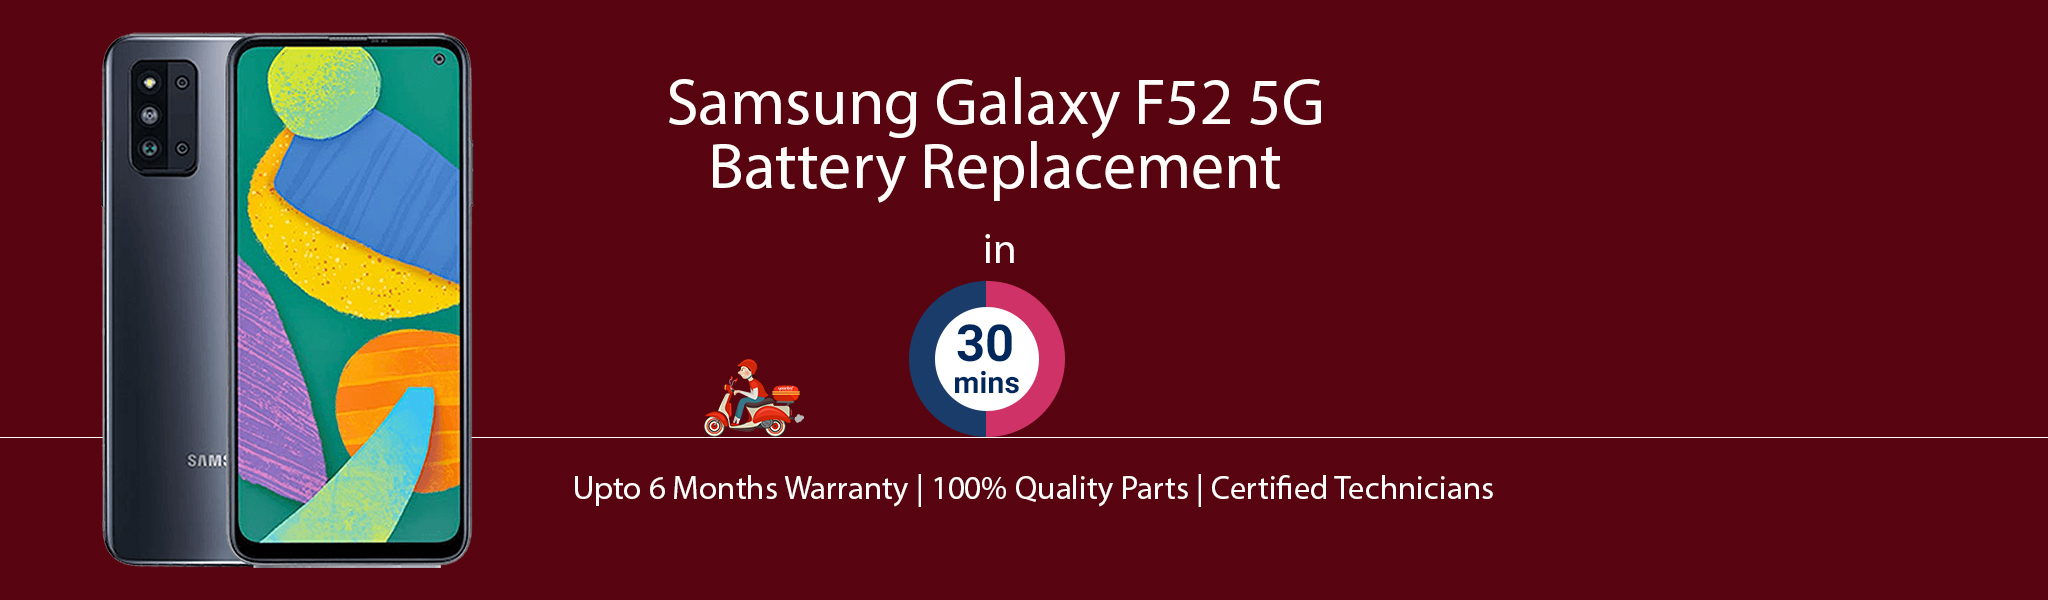 samsung-galaxy-f52-5g-battery-replacement.jpg